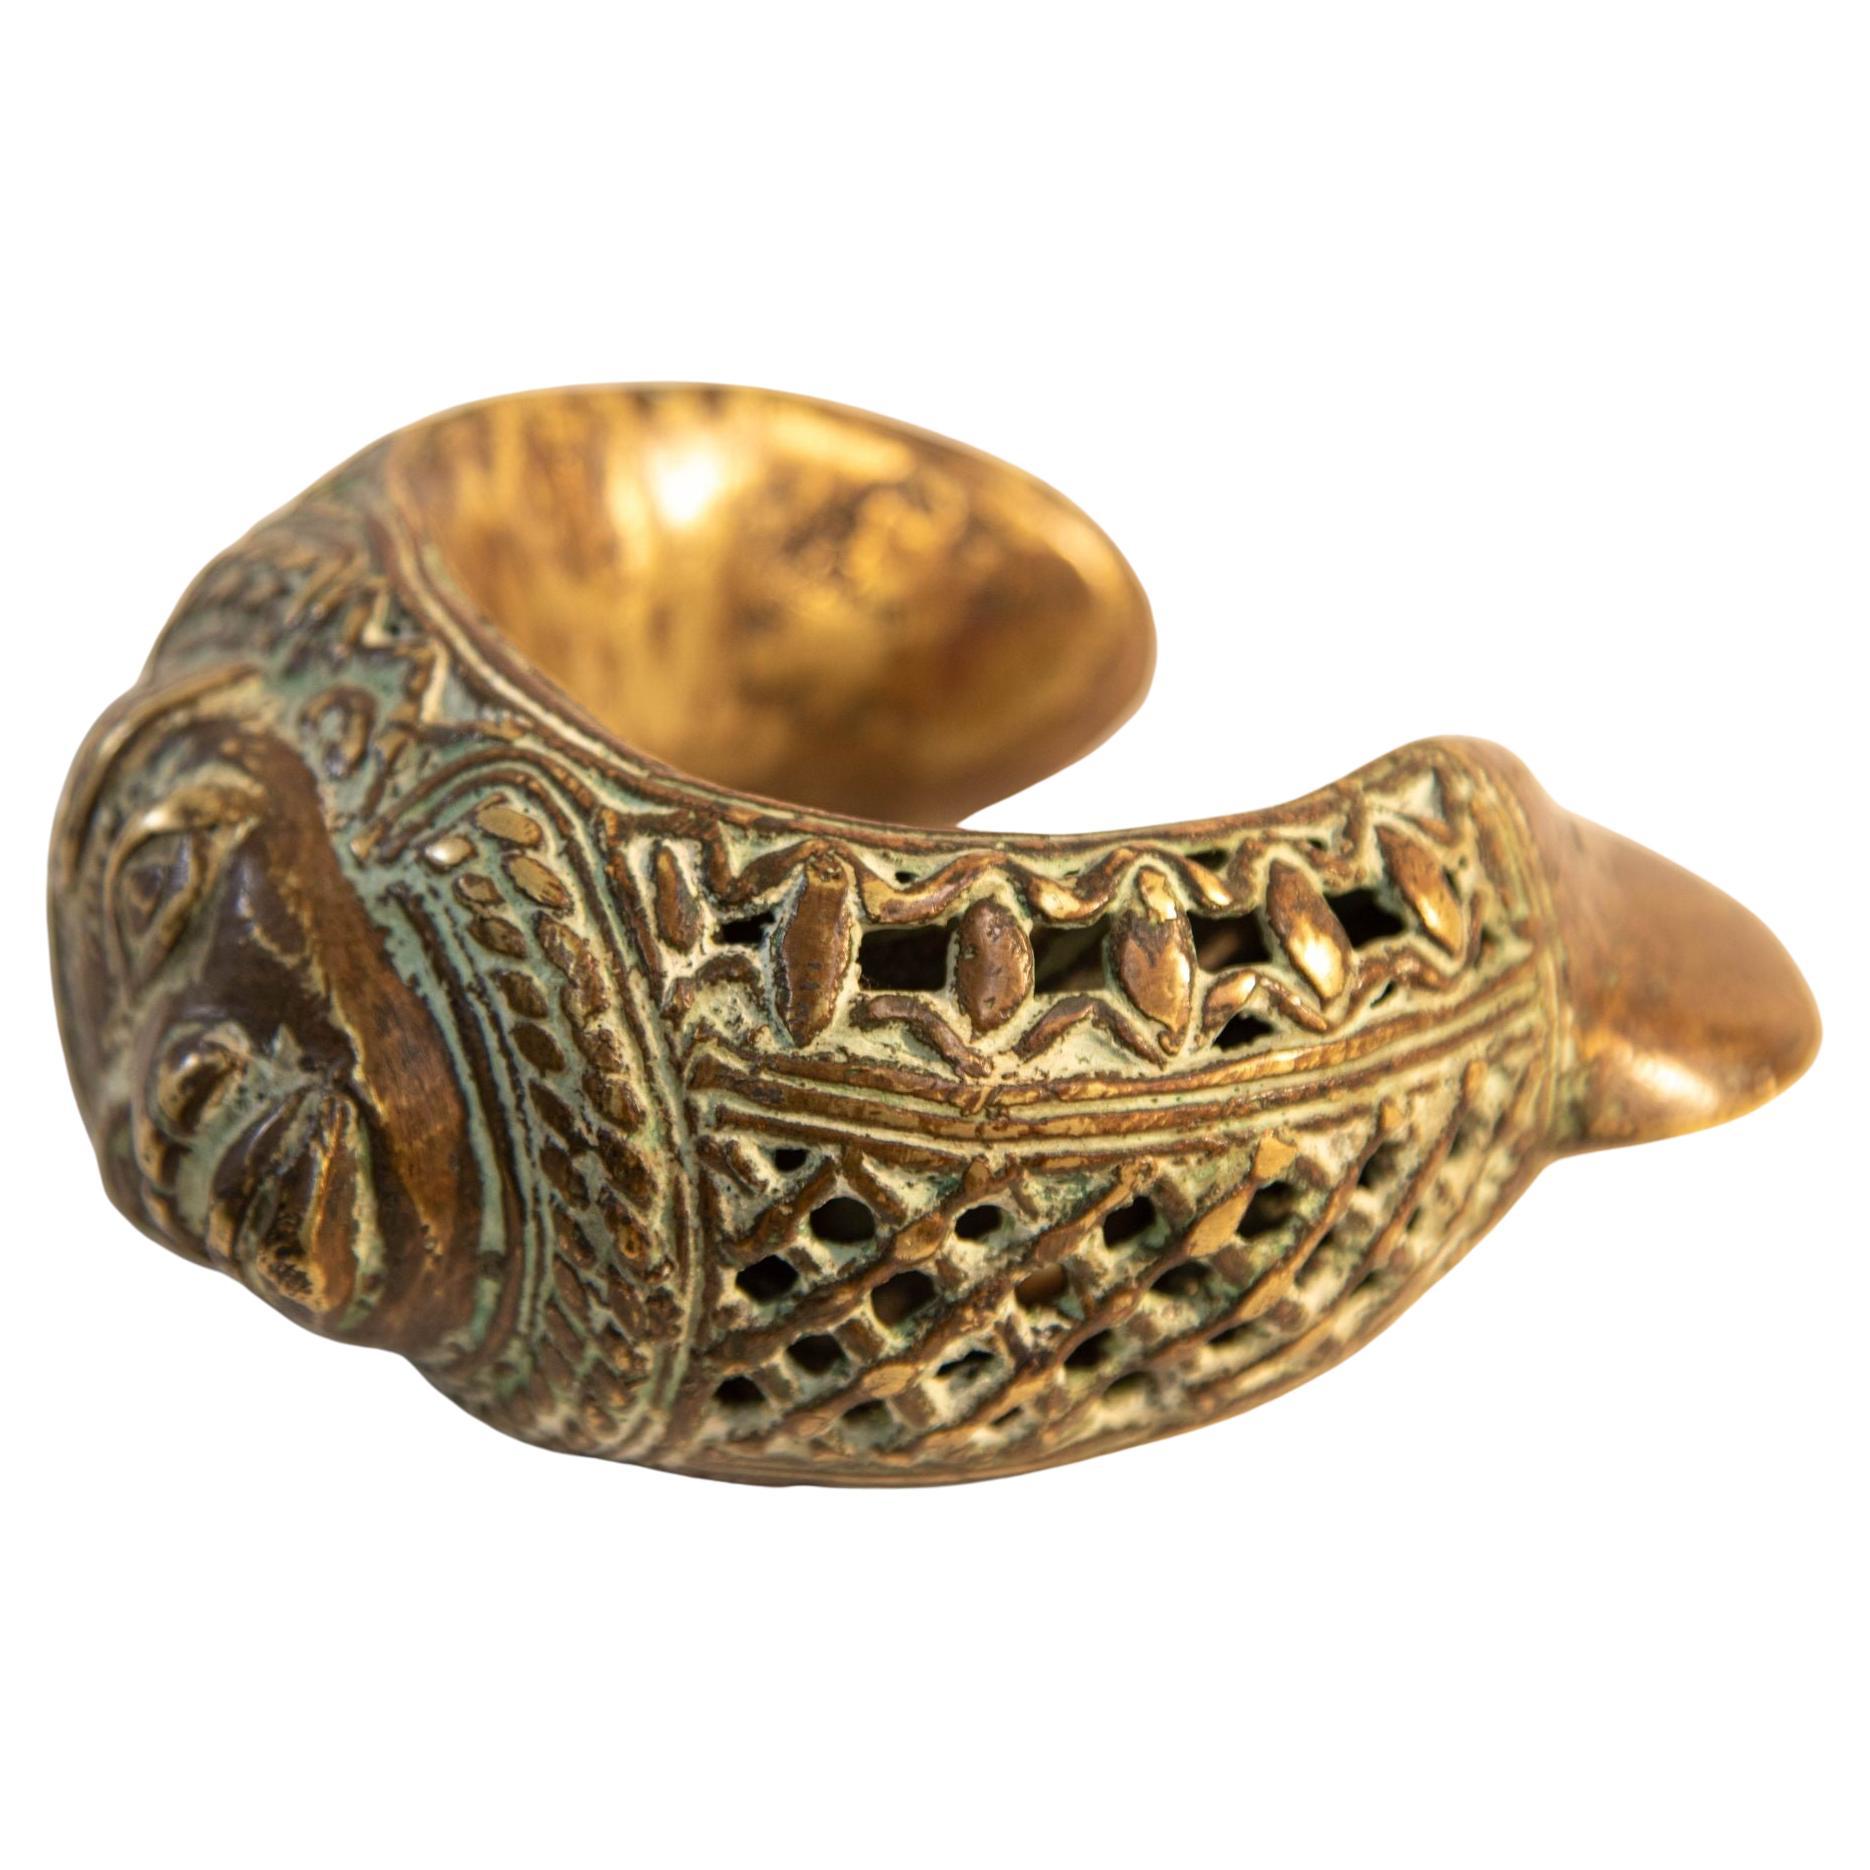 Antique African Bronze Bracelet Currency Bangle Tribal Artifact